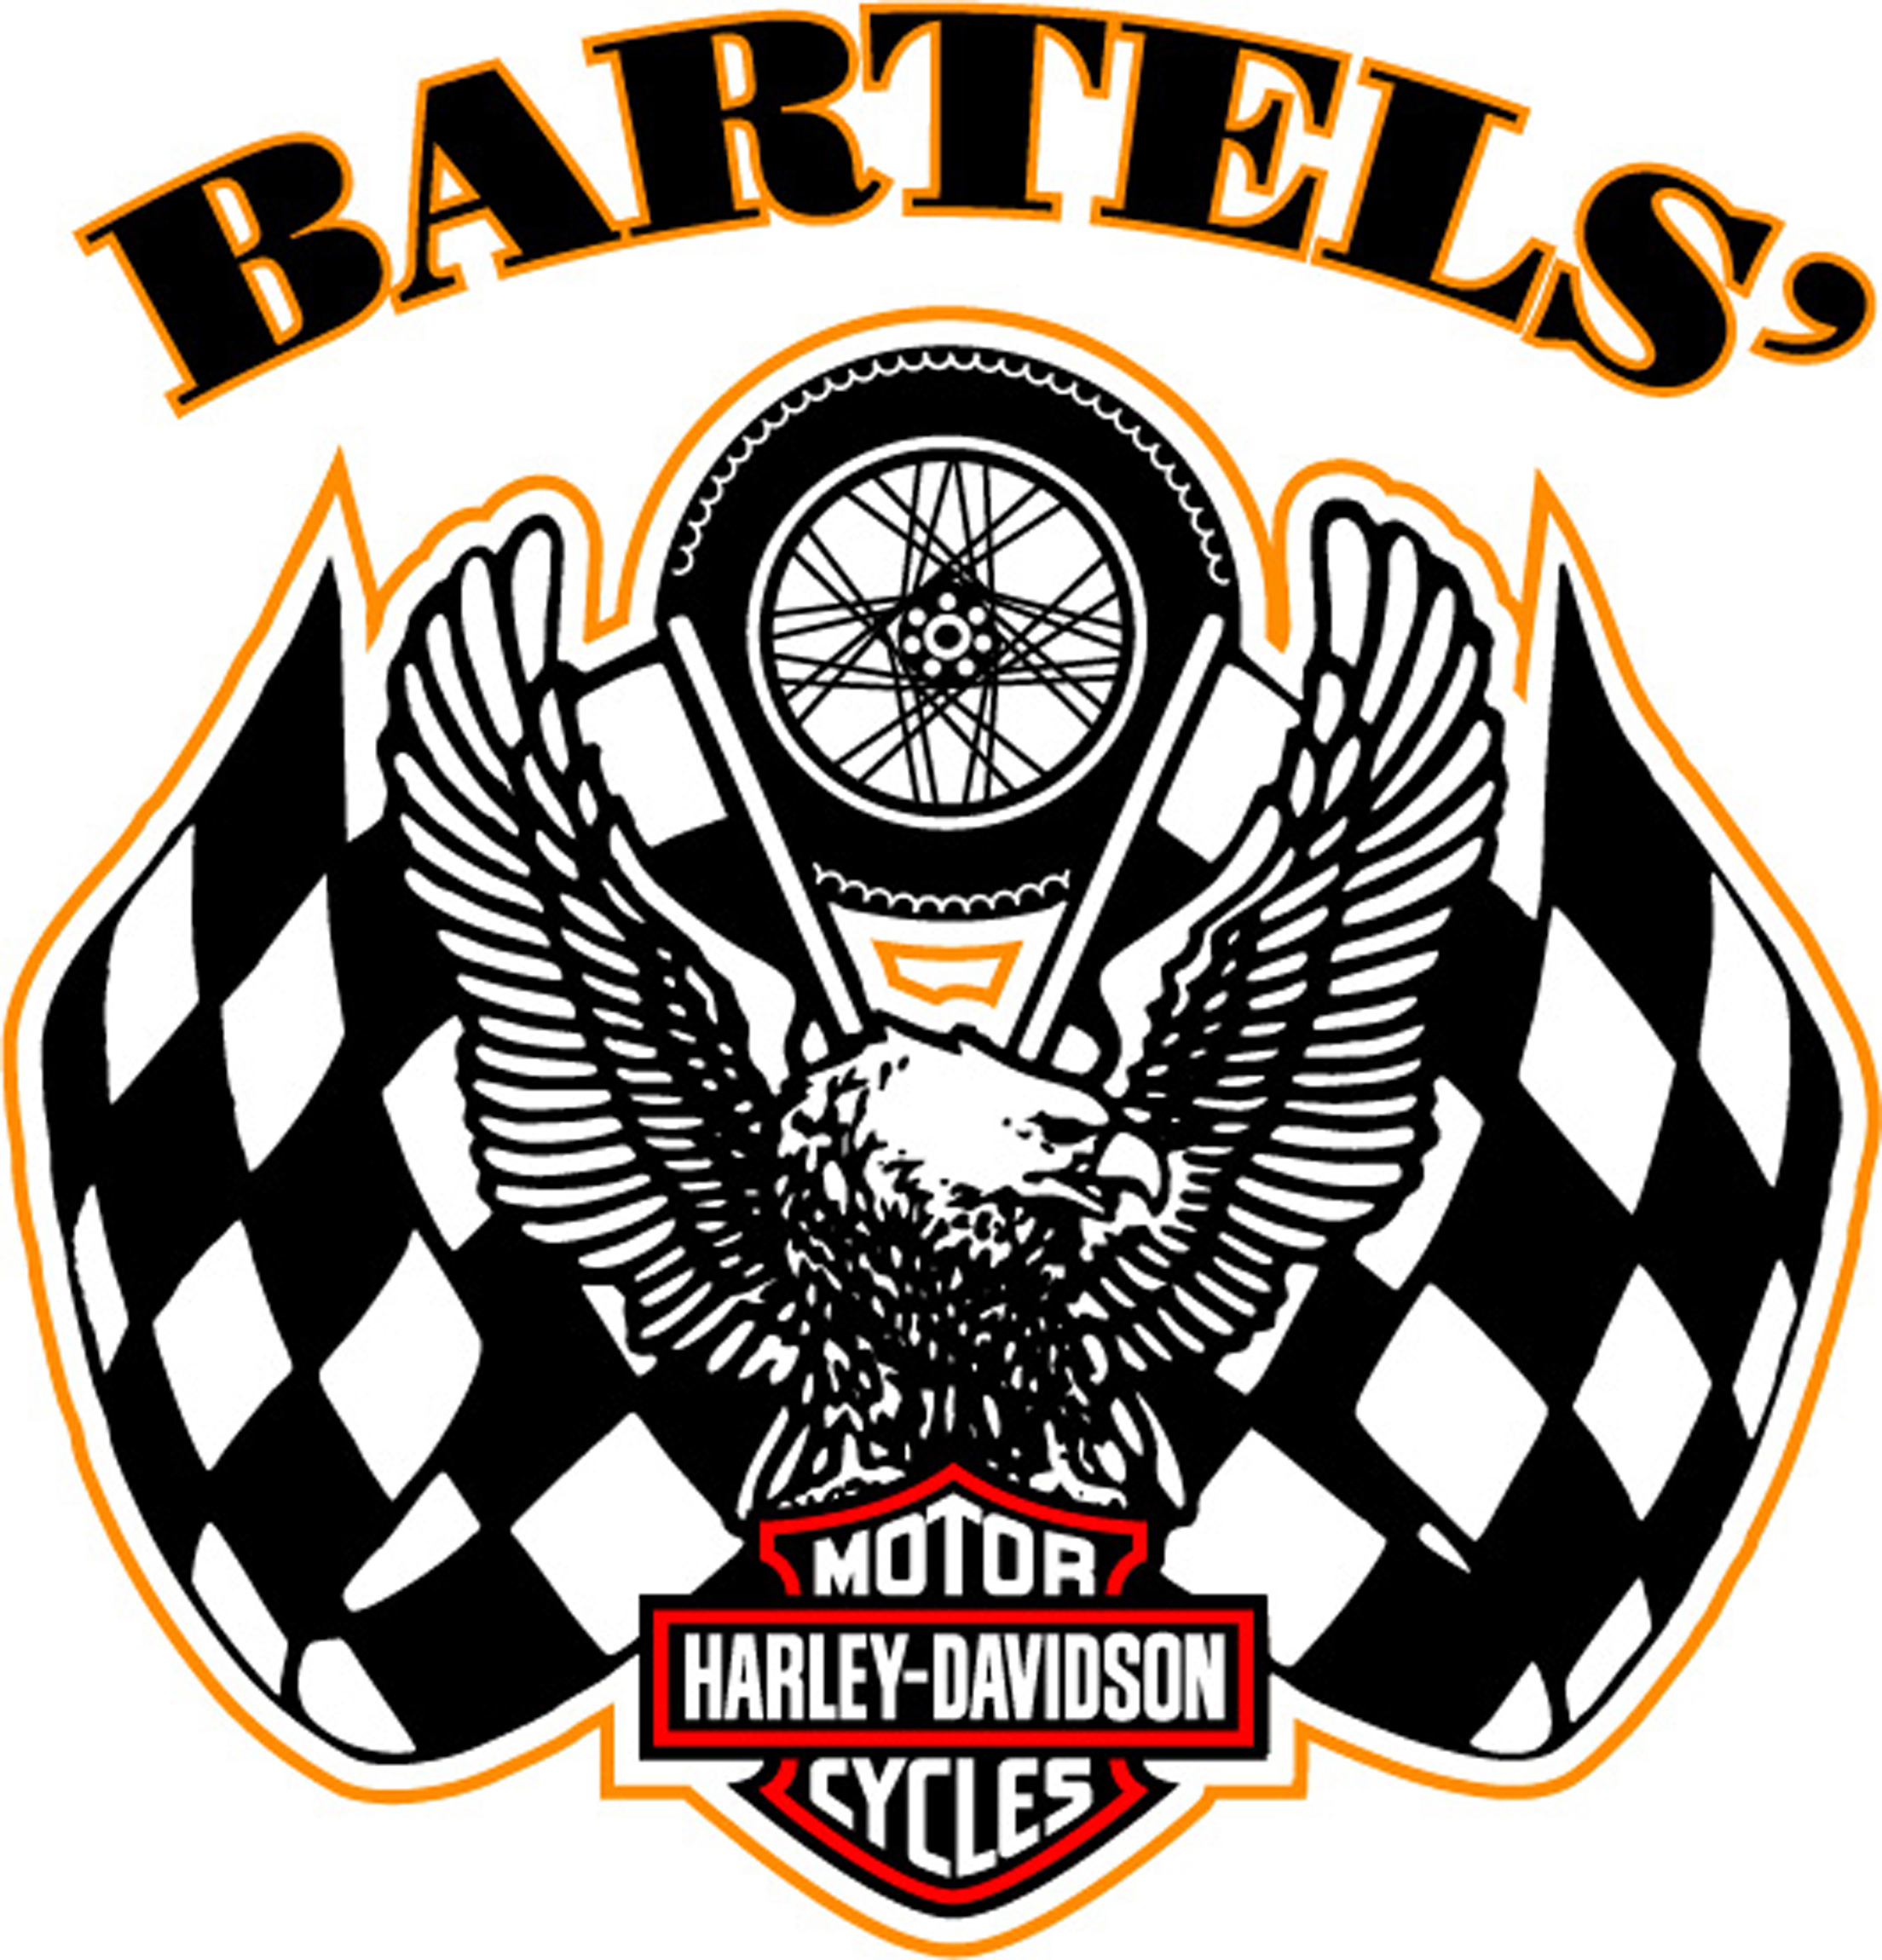 Harley Davidson Eagle Drawing - Clipart library